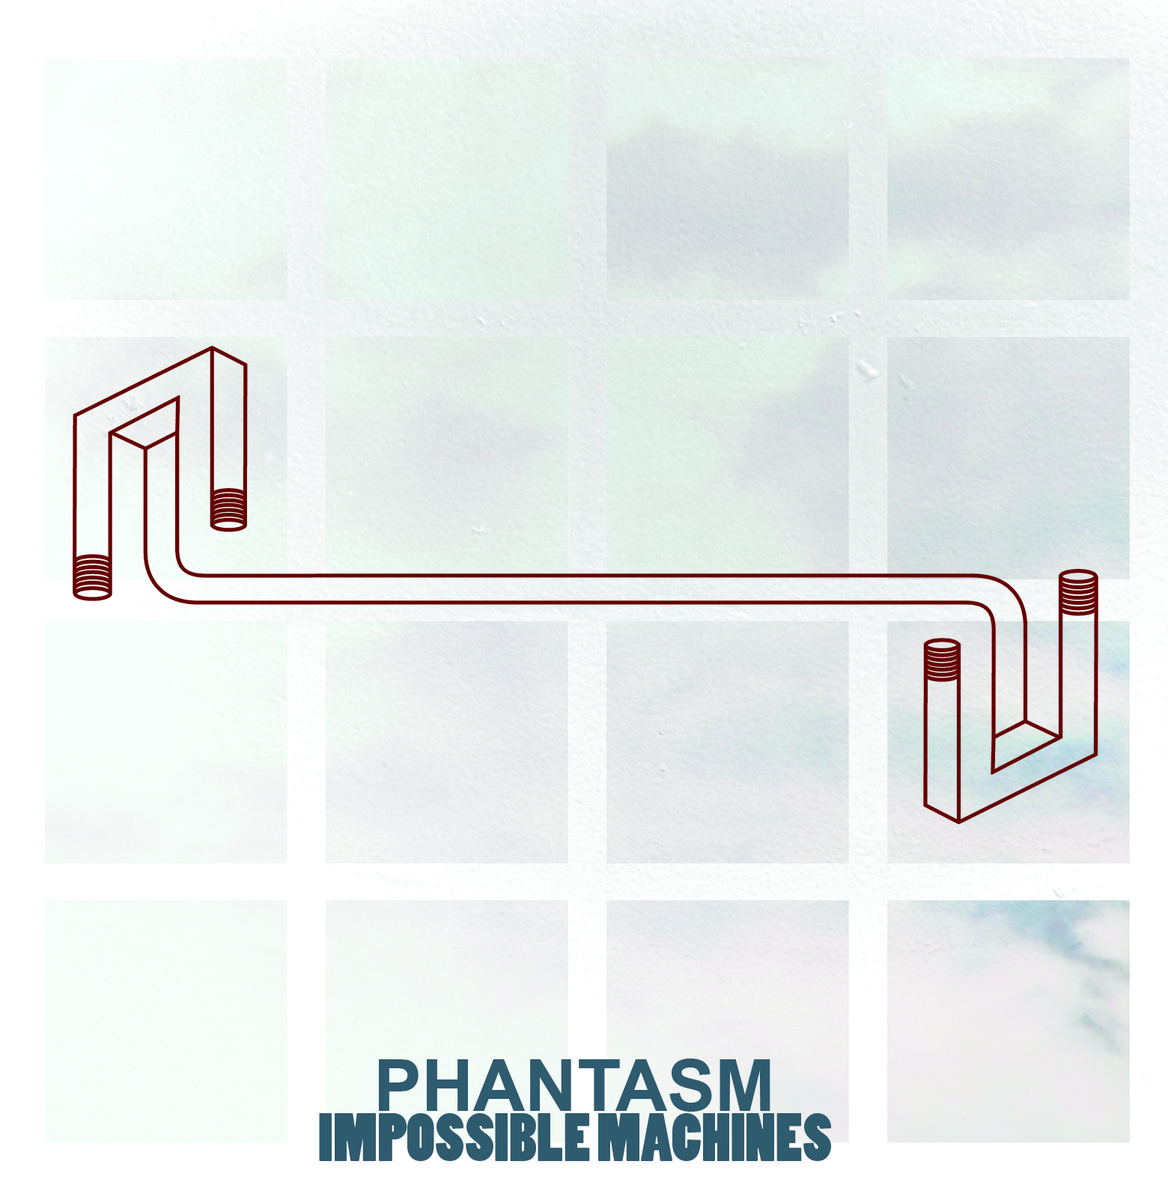 Phantasm “Impossible Machines”